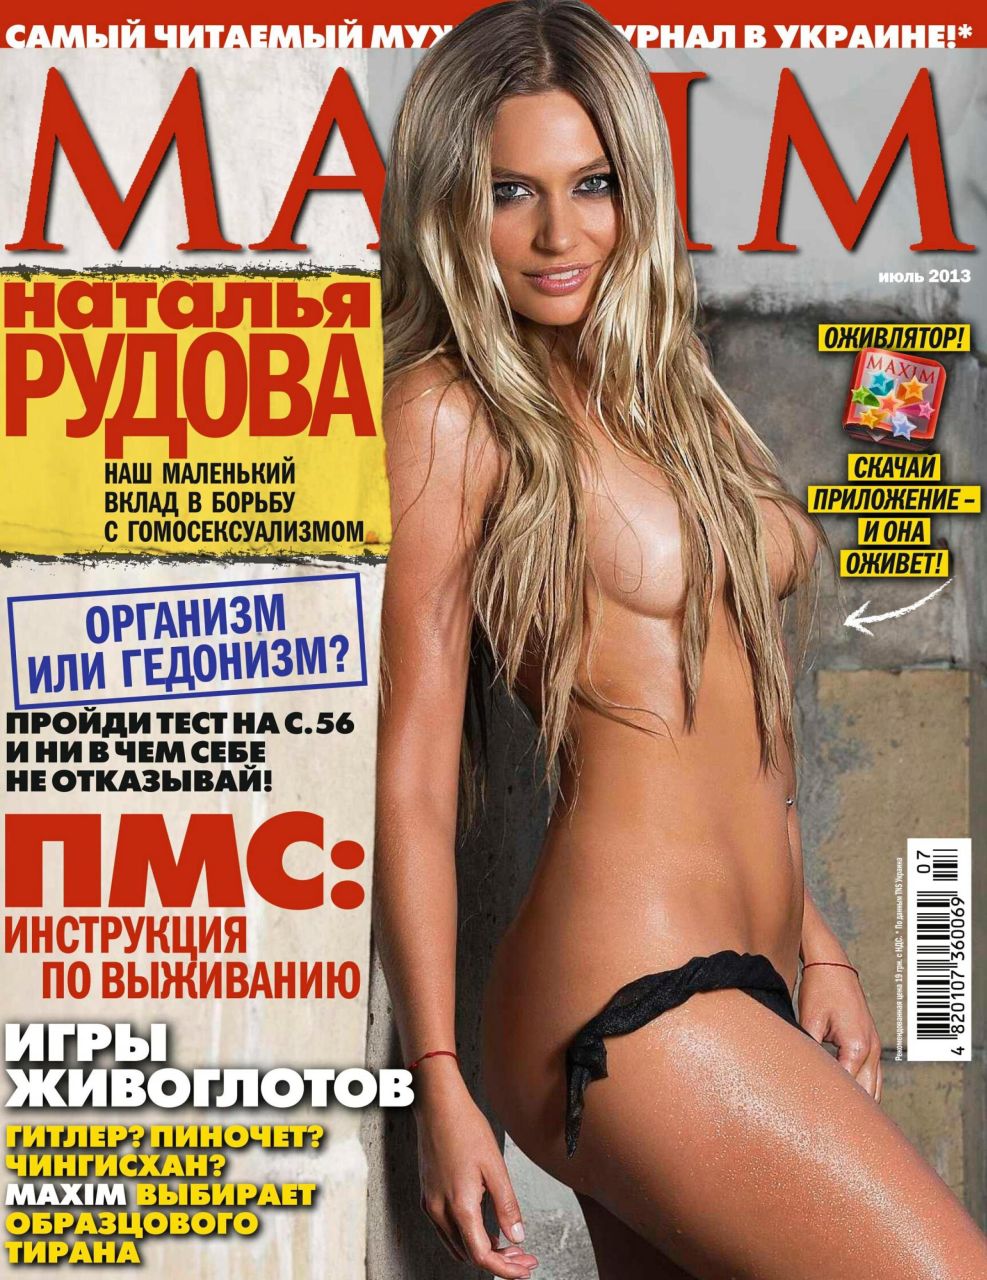 Natalia Rudova - seksowna, naga sesja aktorki w Maximie